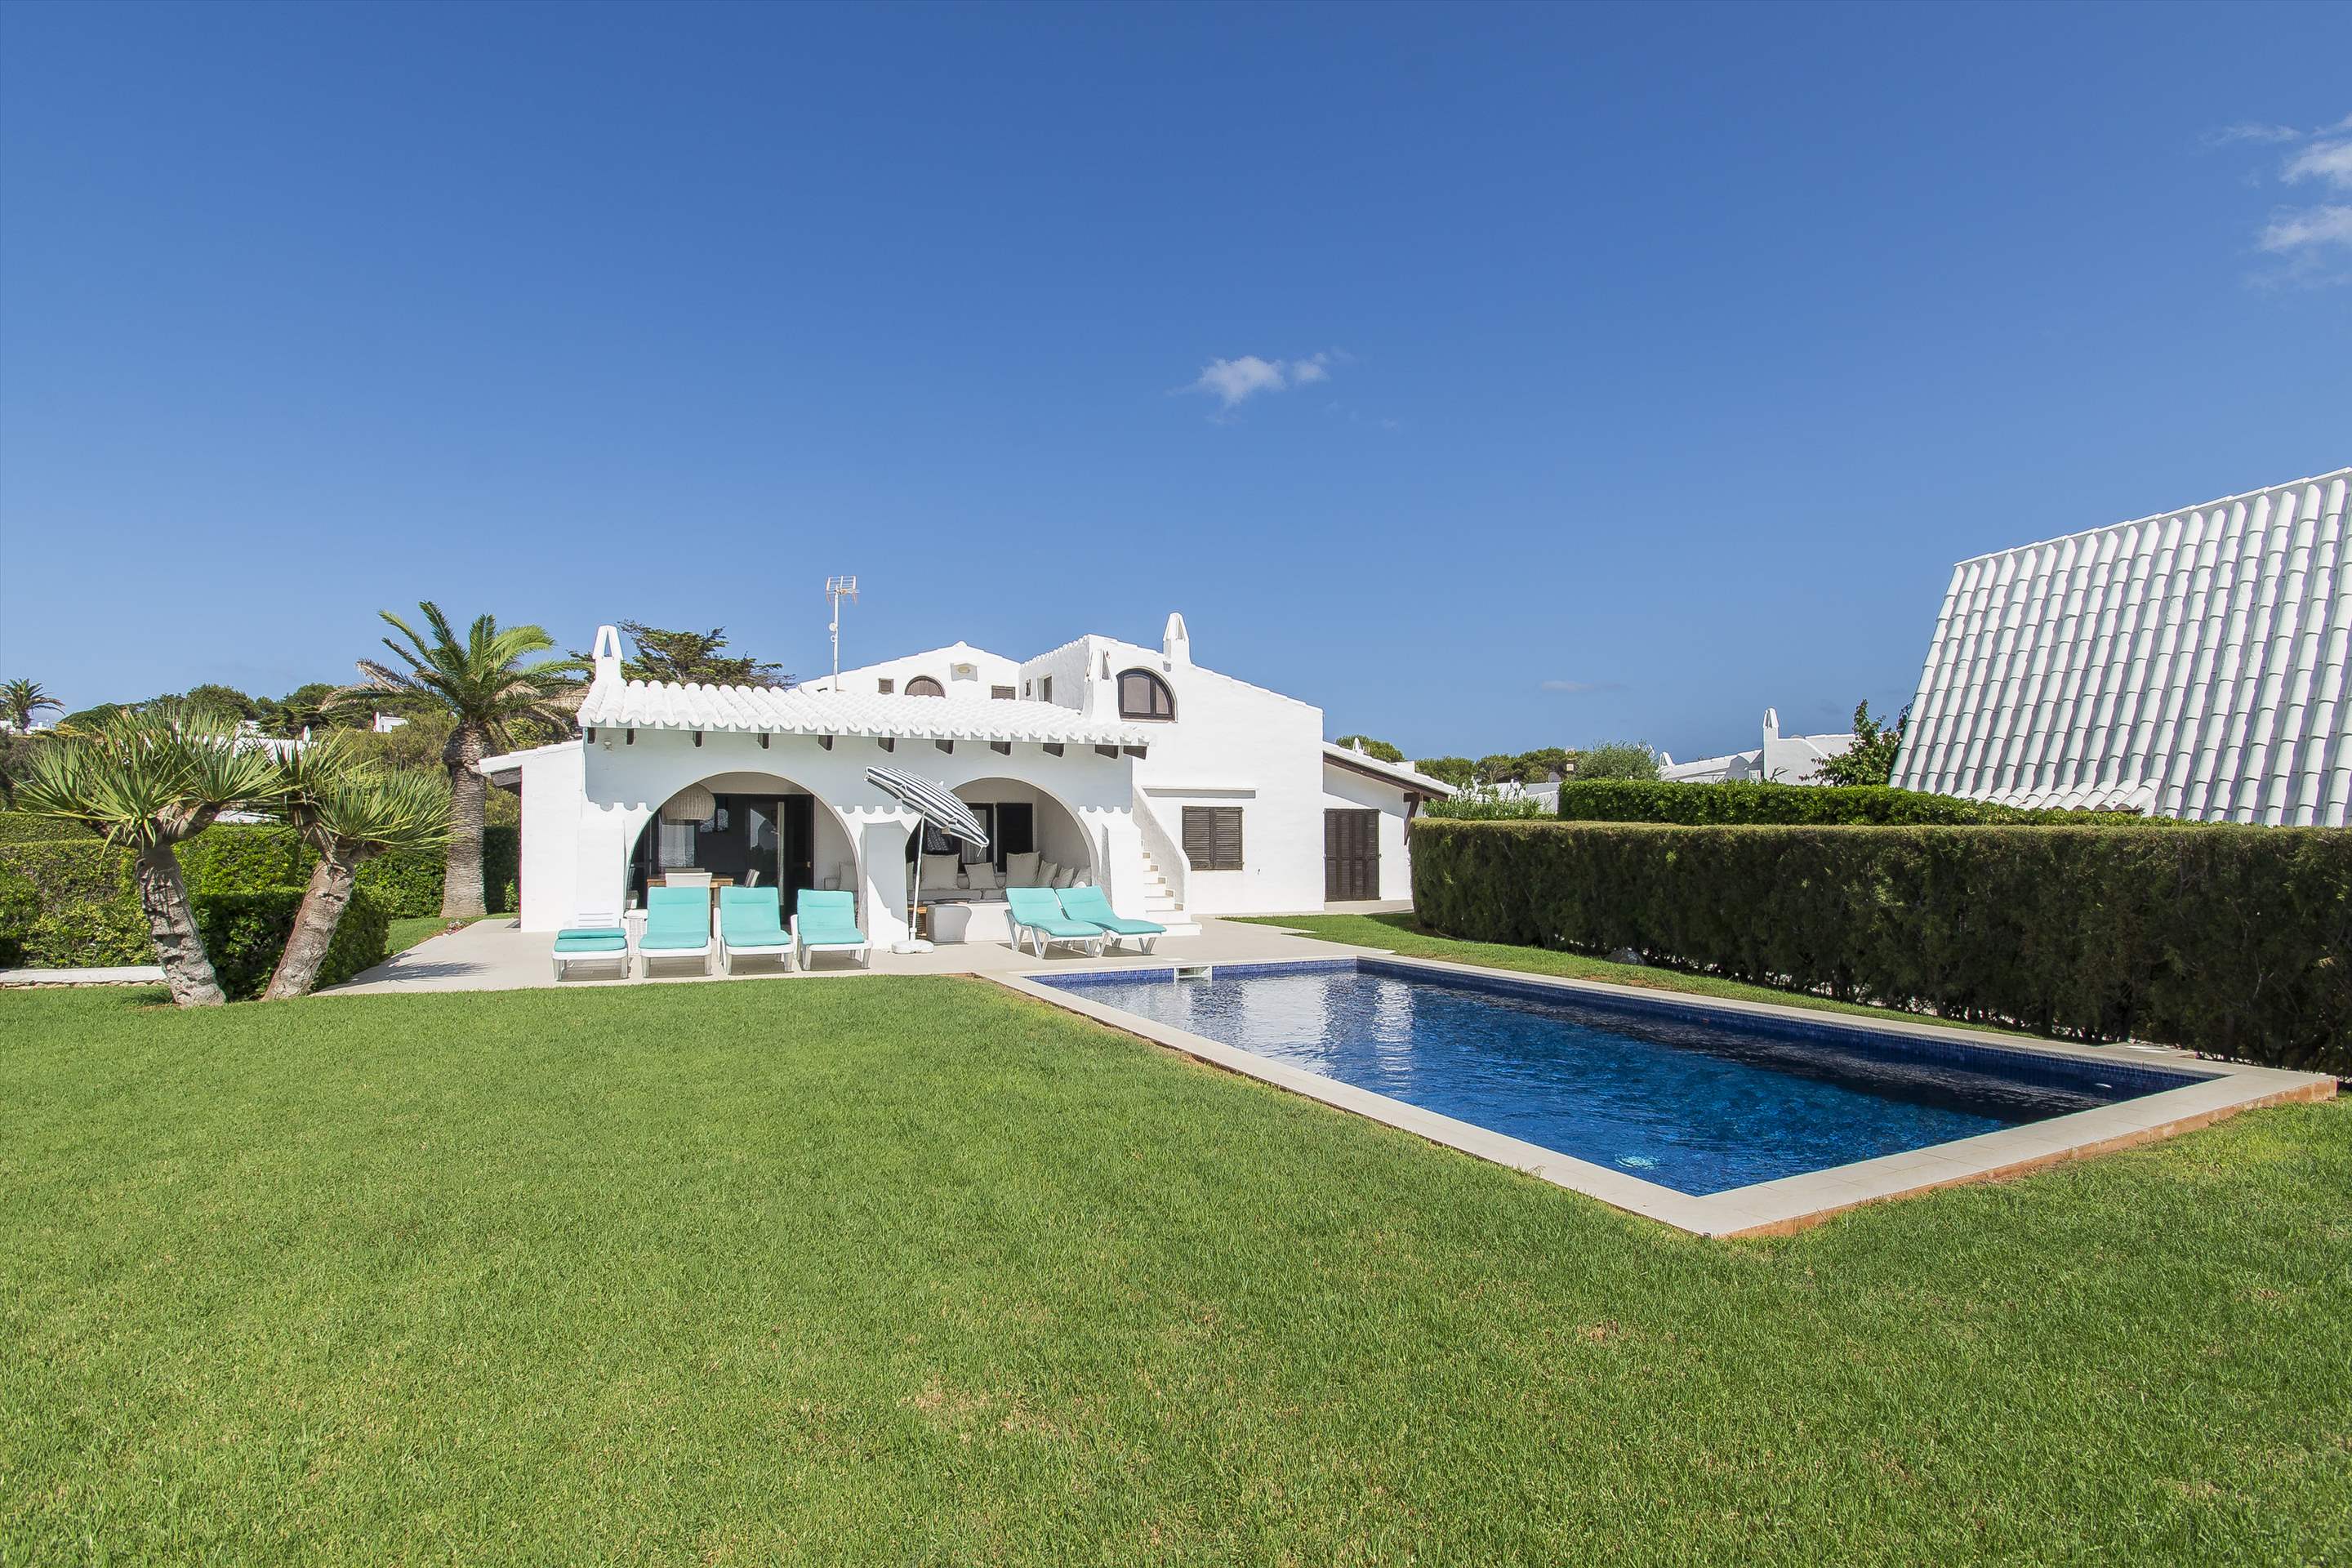 Villa Bini Andu, 3 bedroom villa in Mahon, San Luis & South East, Menorca